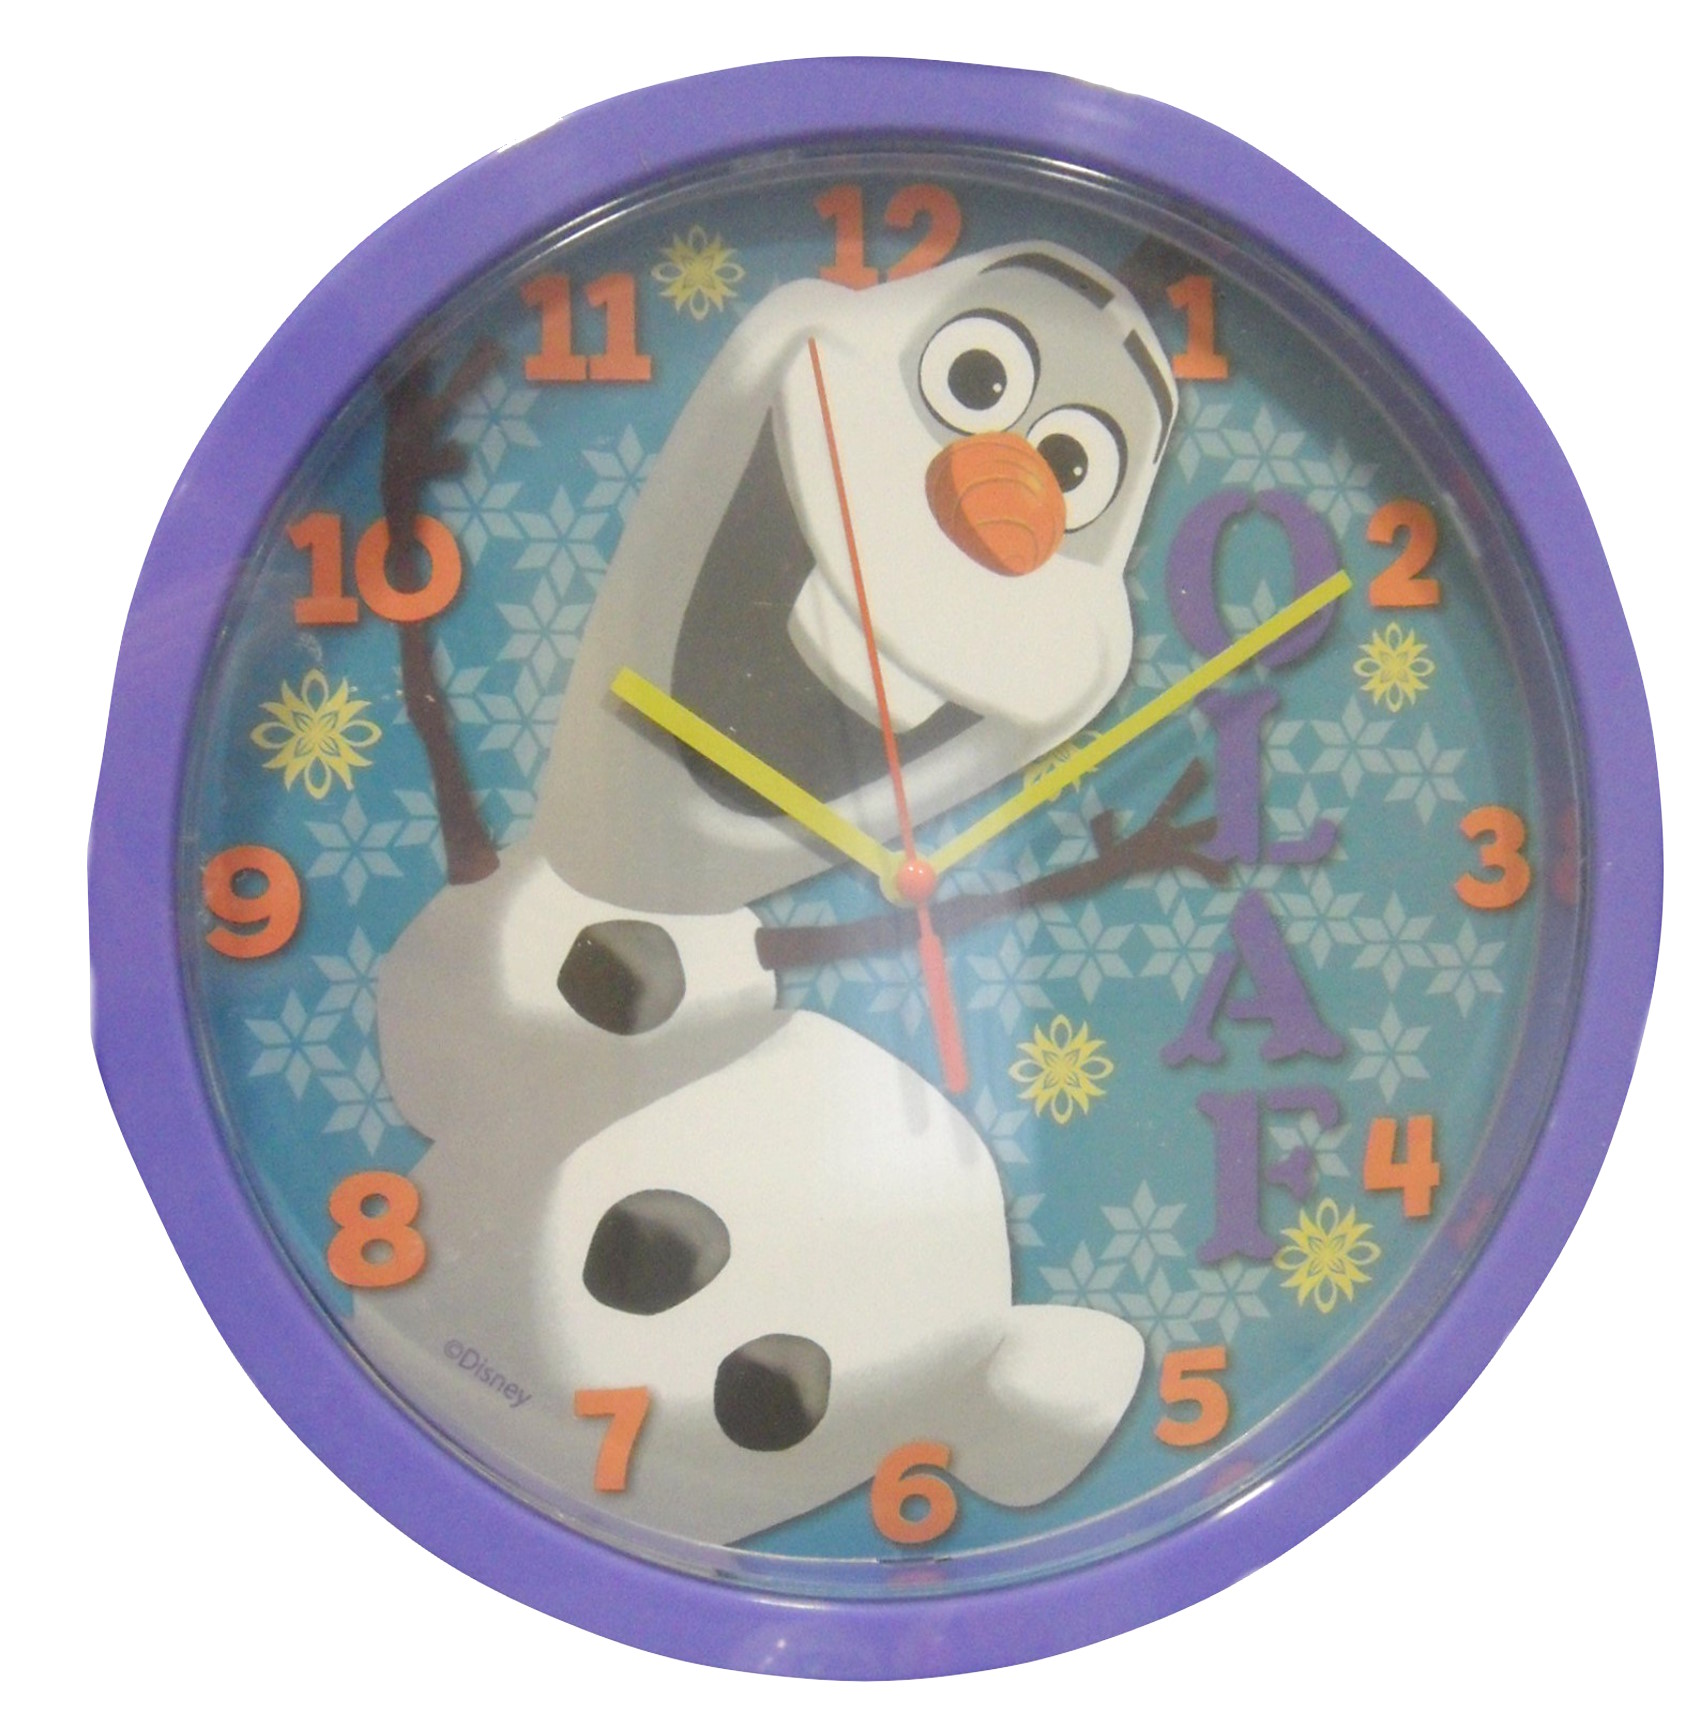 Disney Frozen Olaf Clock.JPG  by Thingimijigs